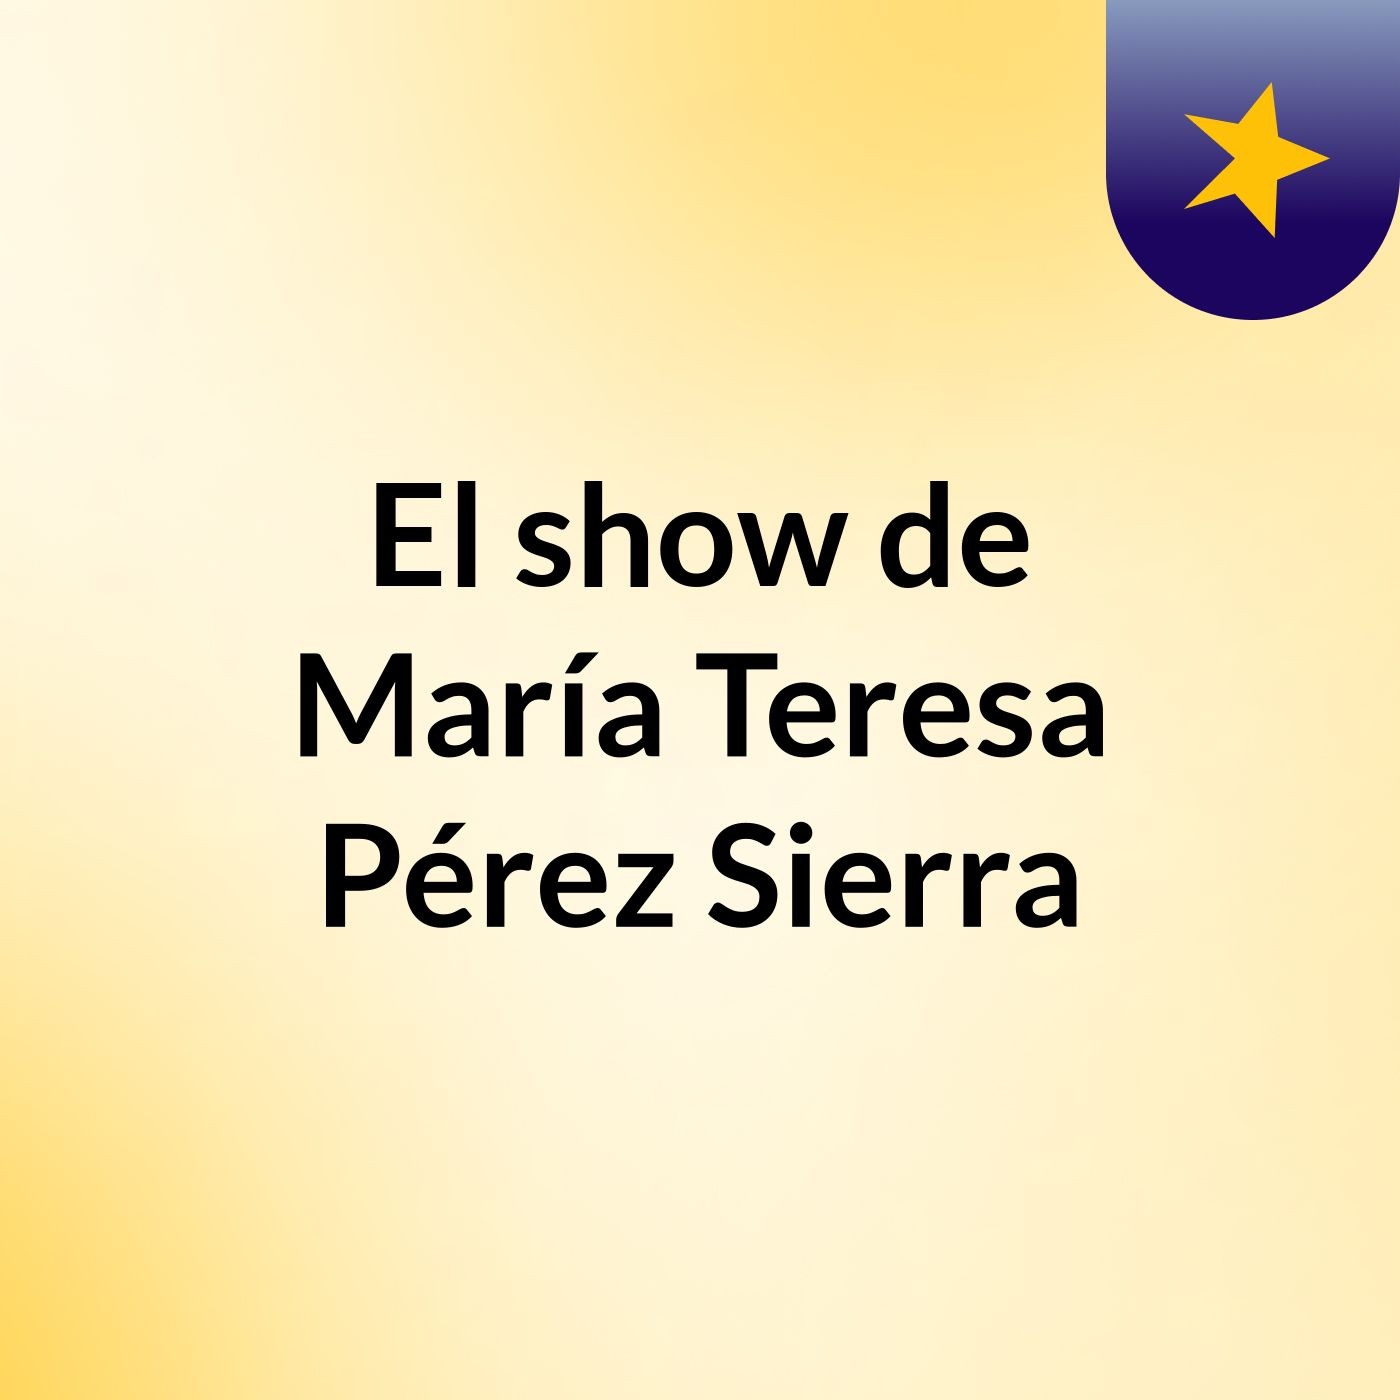 El show de María Teresa Pérez Sierra